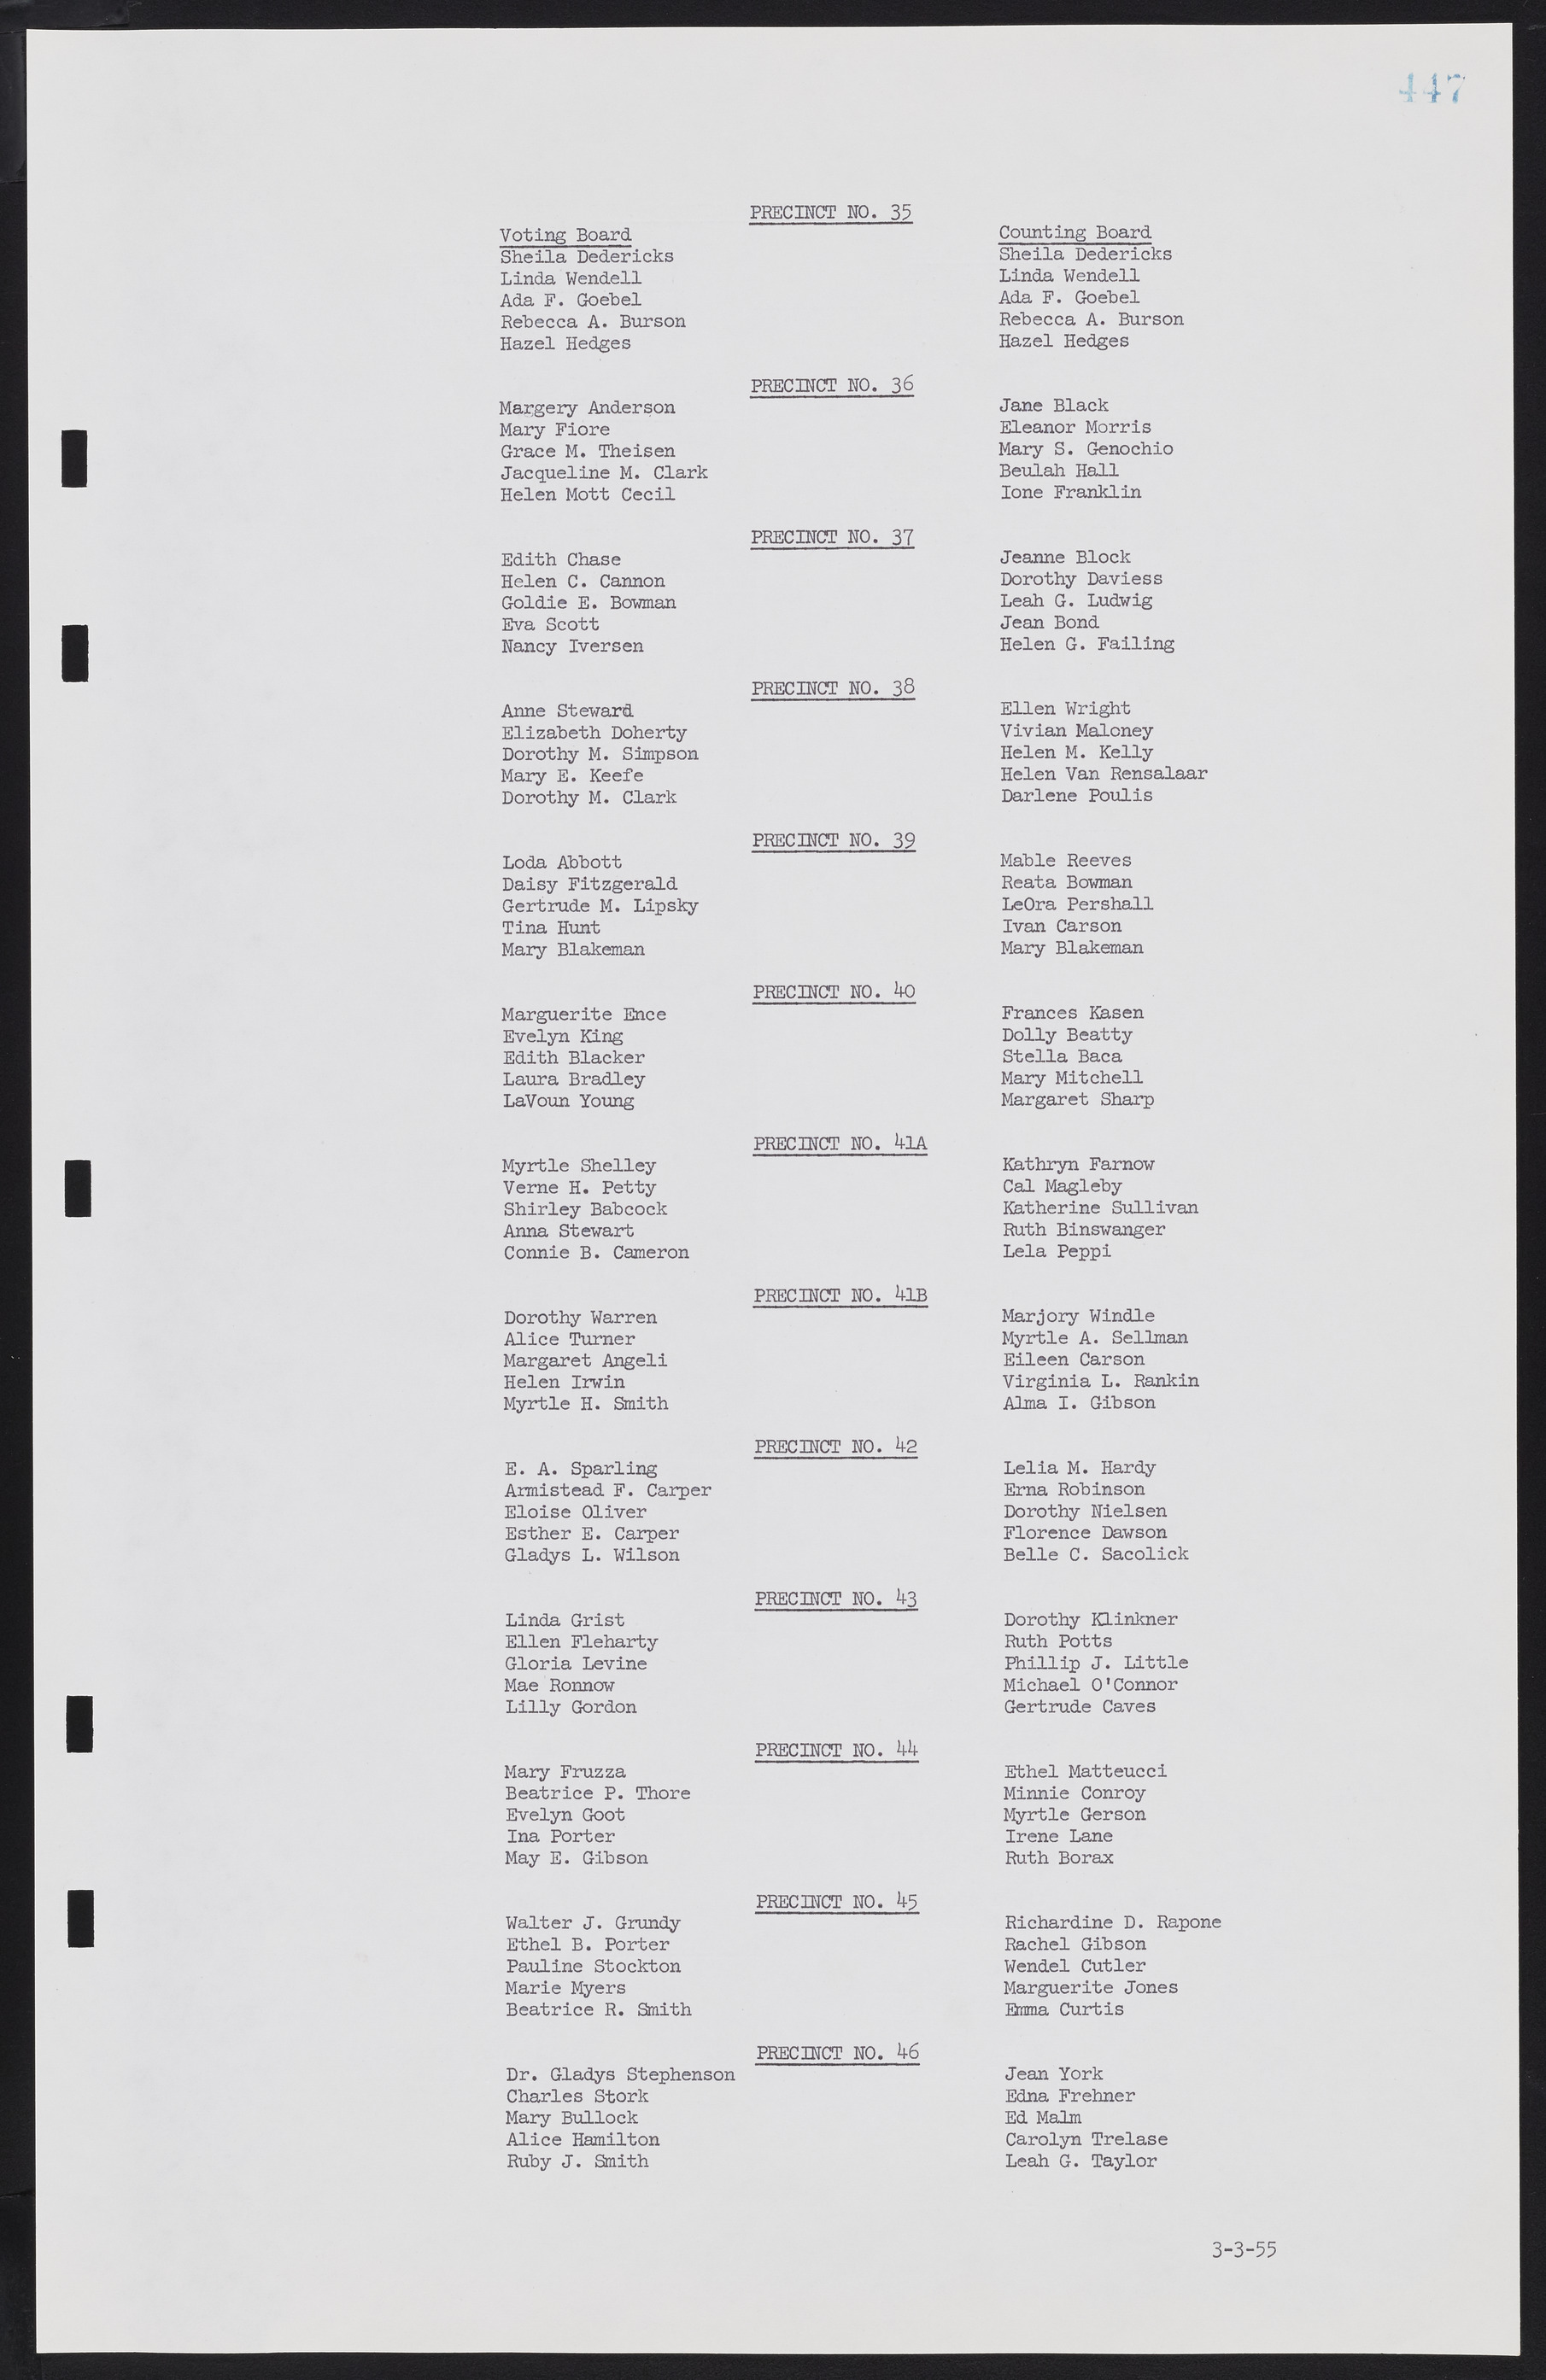 Las Vegas City Commission Minutes, February 17, 1954 to September 21, 1955, lvc000009-453